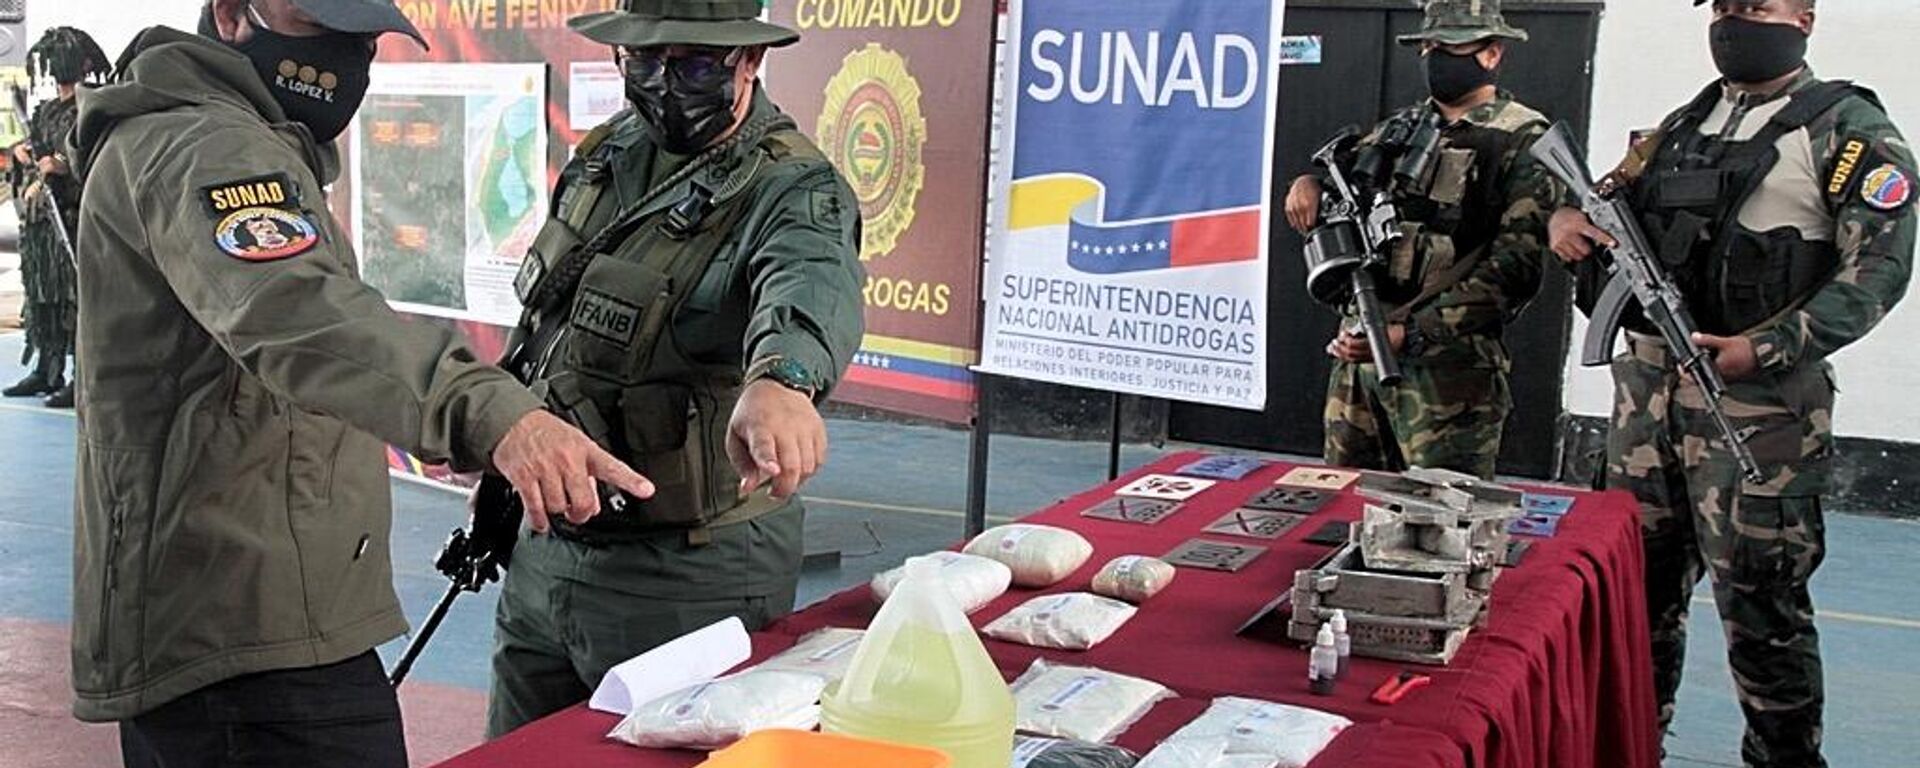 Operativo de incautación de droga en la frontera colombo-venezolana - Sputnik Mundo, 1920, 12.02.2022